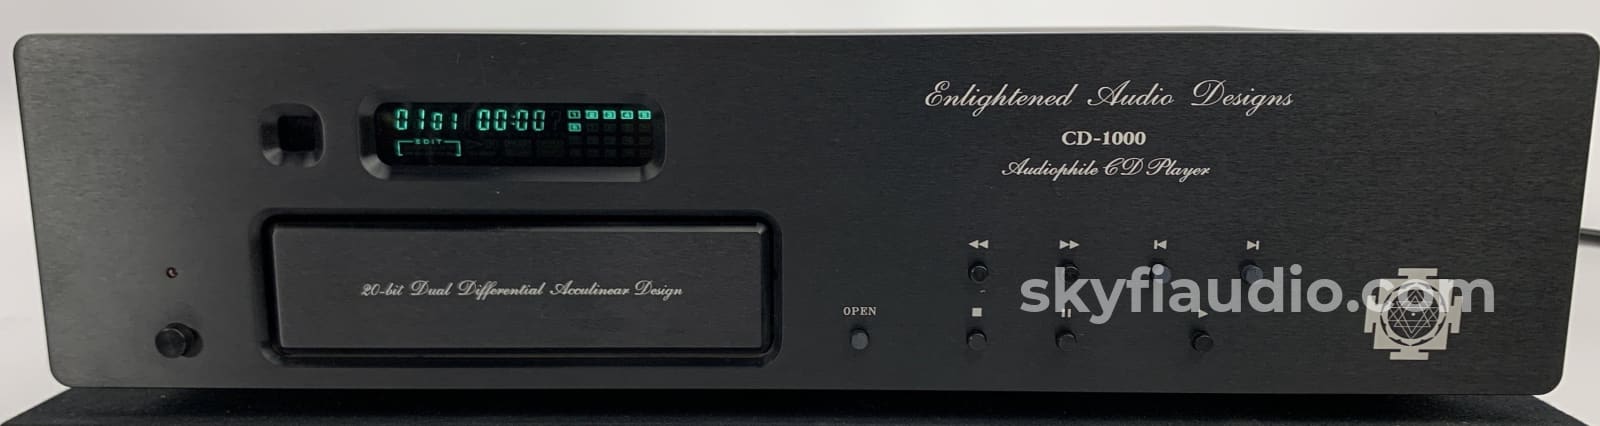 Ead (Enlightened Audio Designs) Cd-1000 Cd Player + Digital